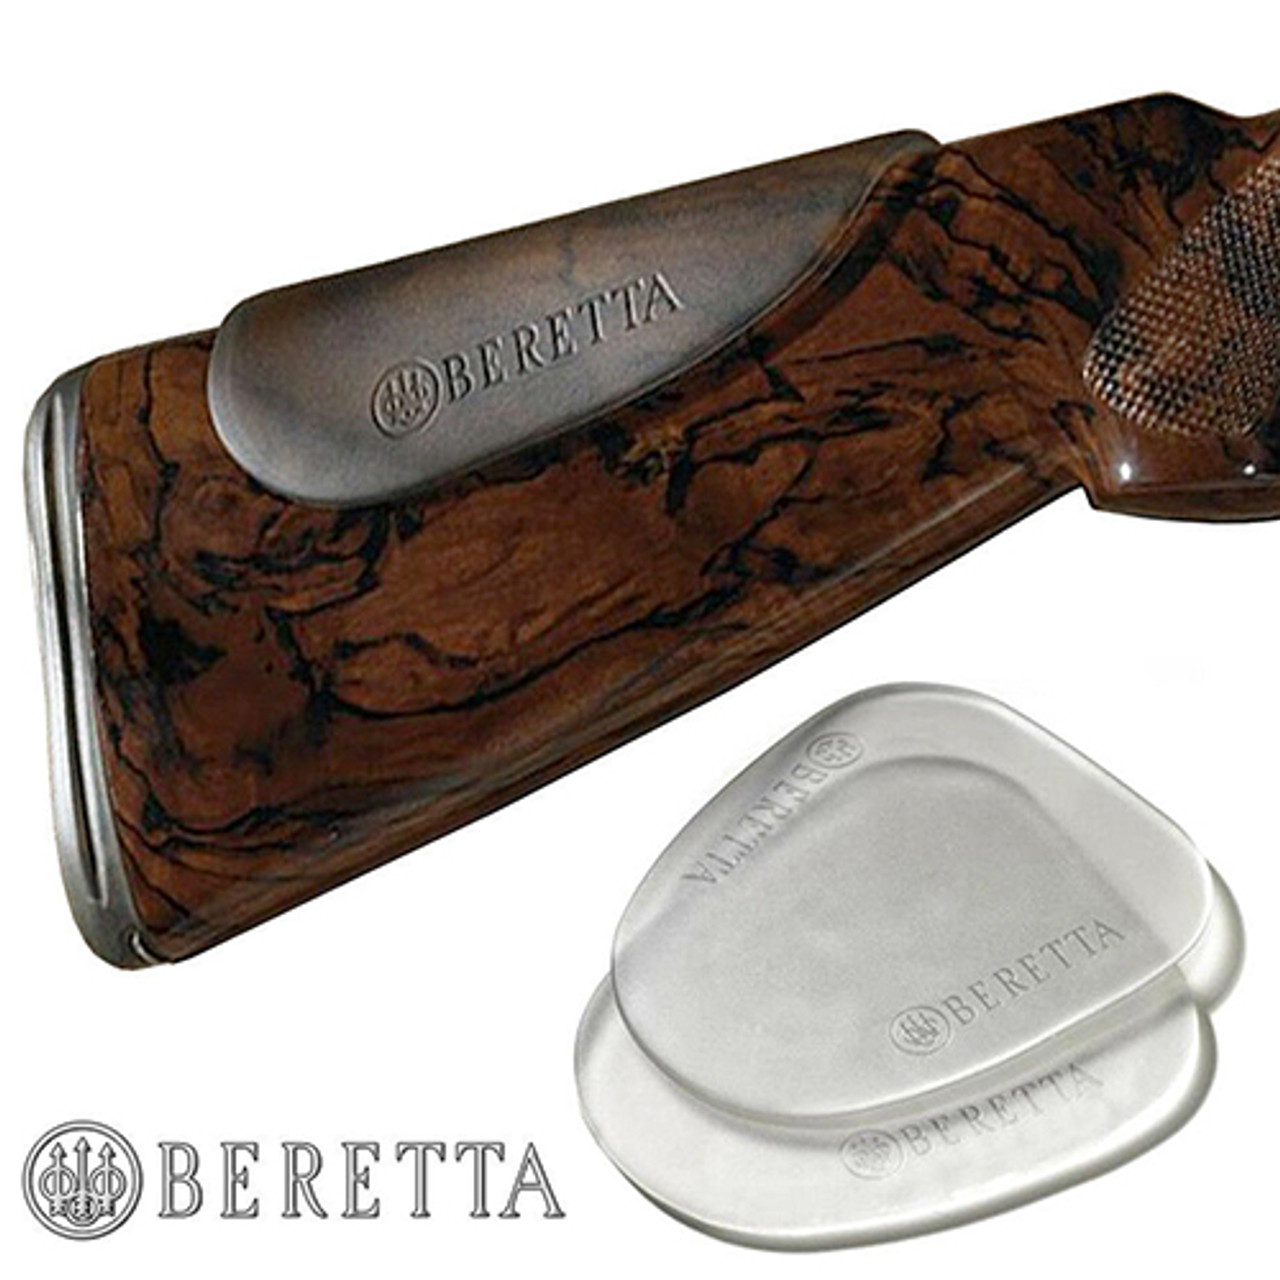 Beretta Gel-Tek Cheek Protector .12" Thickness Self-Adhesive